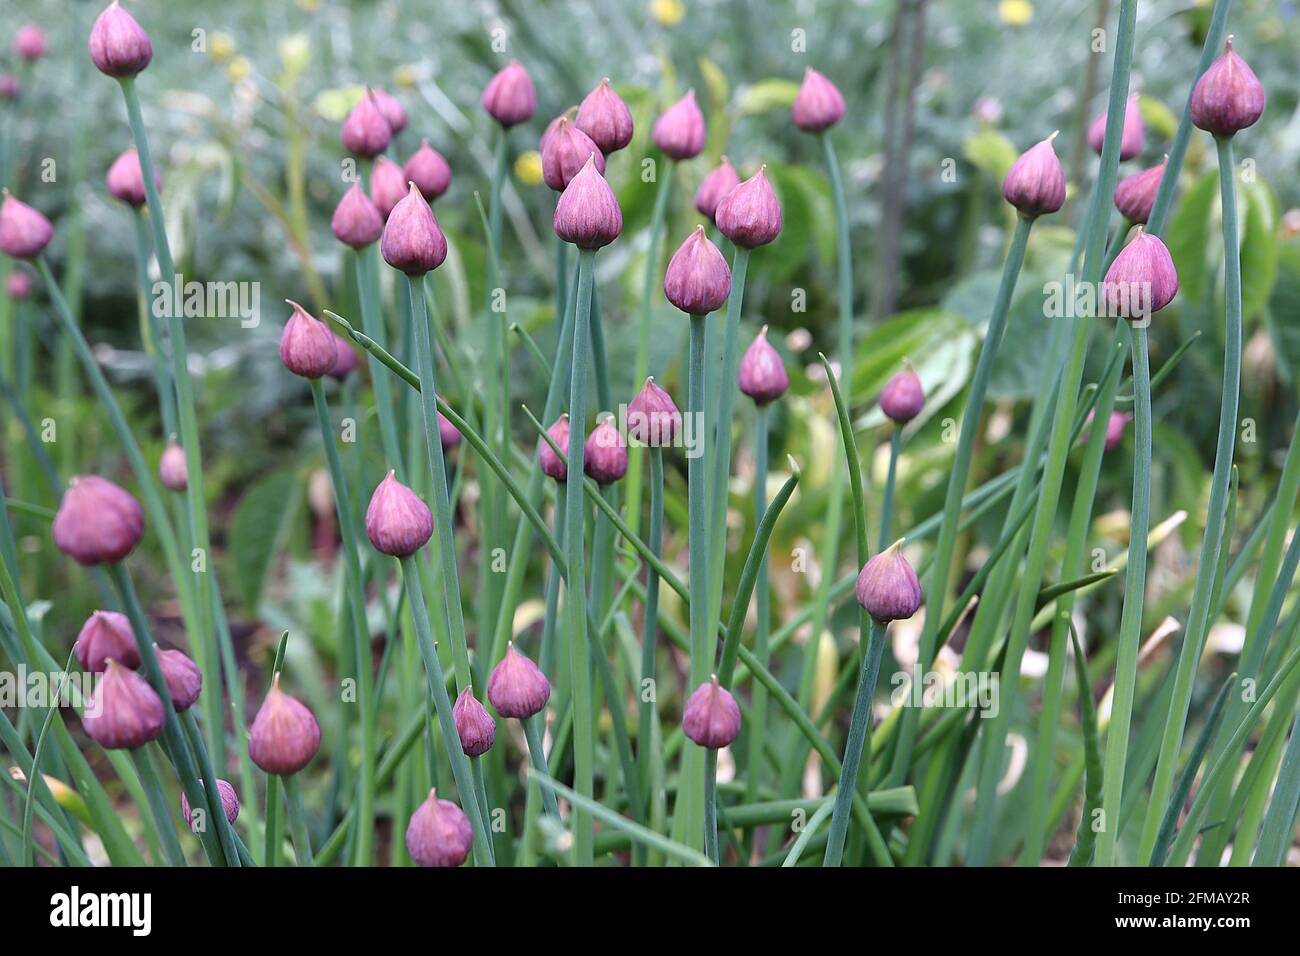 Allium schoenoprasum buds Chive flower buds – group of small onion dome-shaped light purple flower buds,  May, England, UK Stock Photo